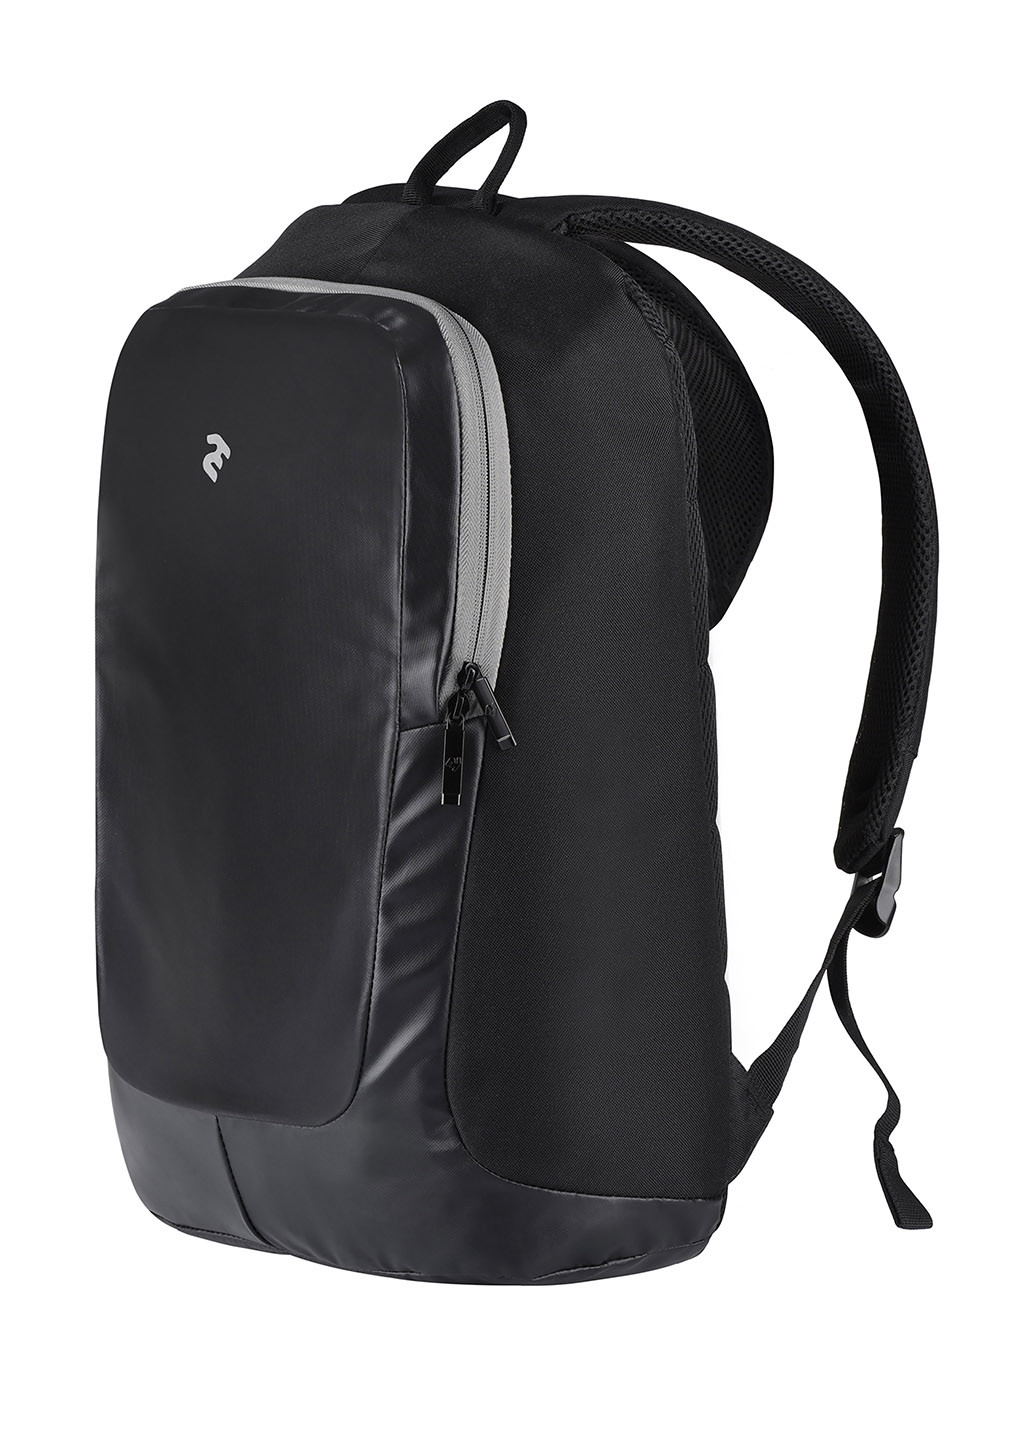 Рюкзак для ноутбука -BPN216BK 16" чёрный 2E 2E-BPN216BK комбинированная